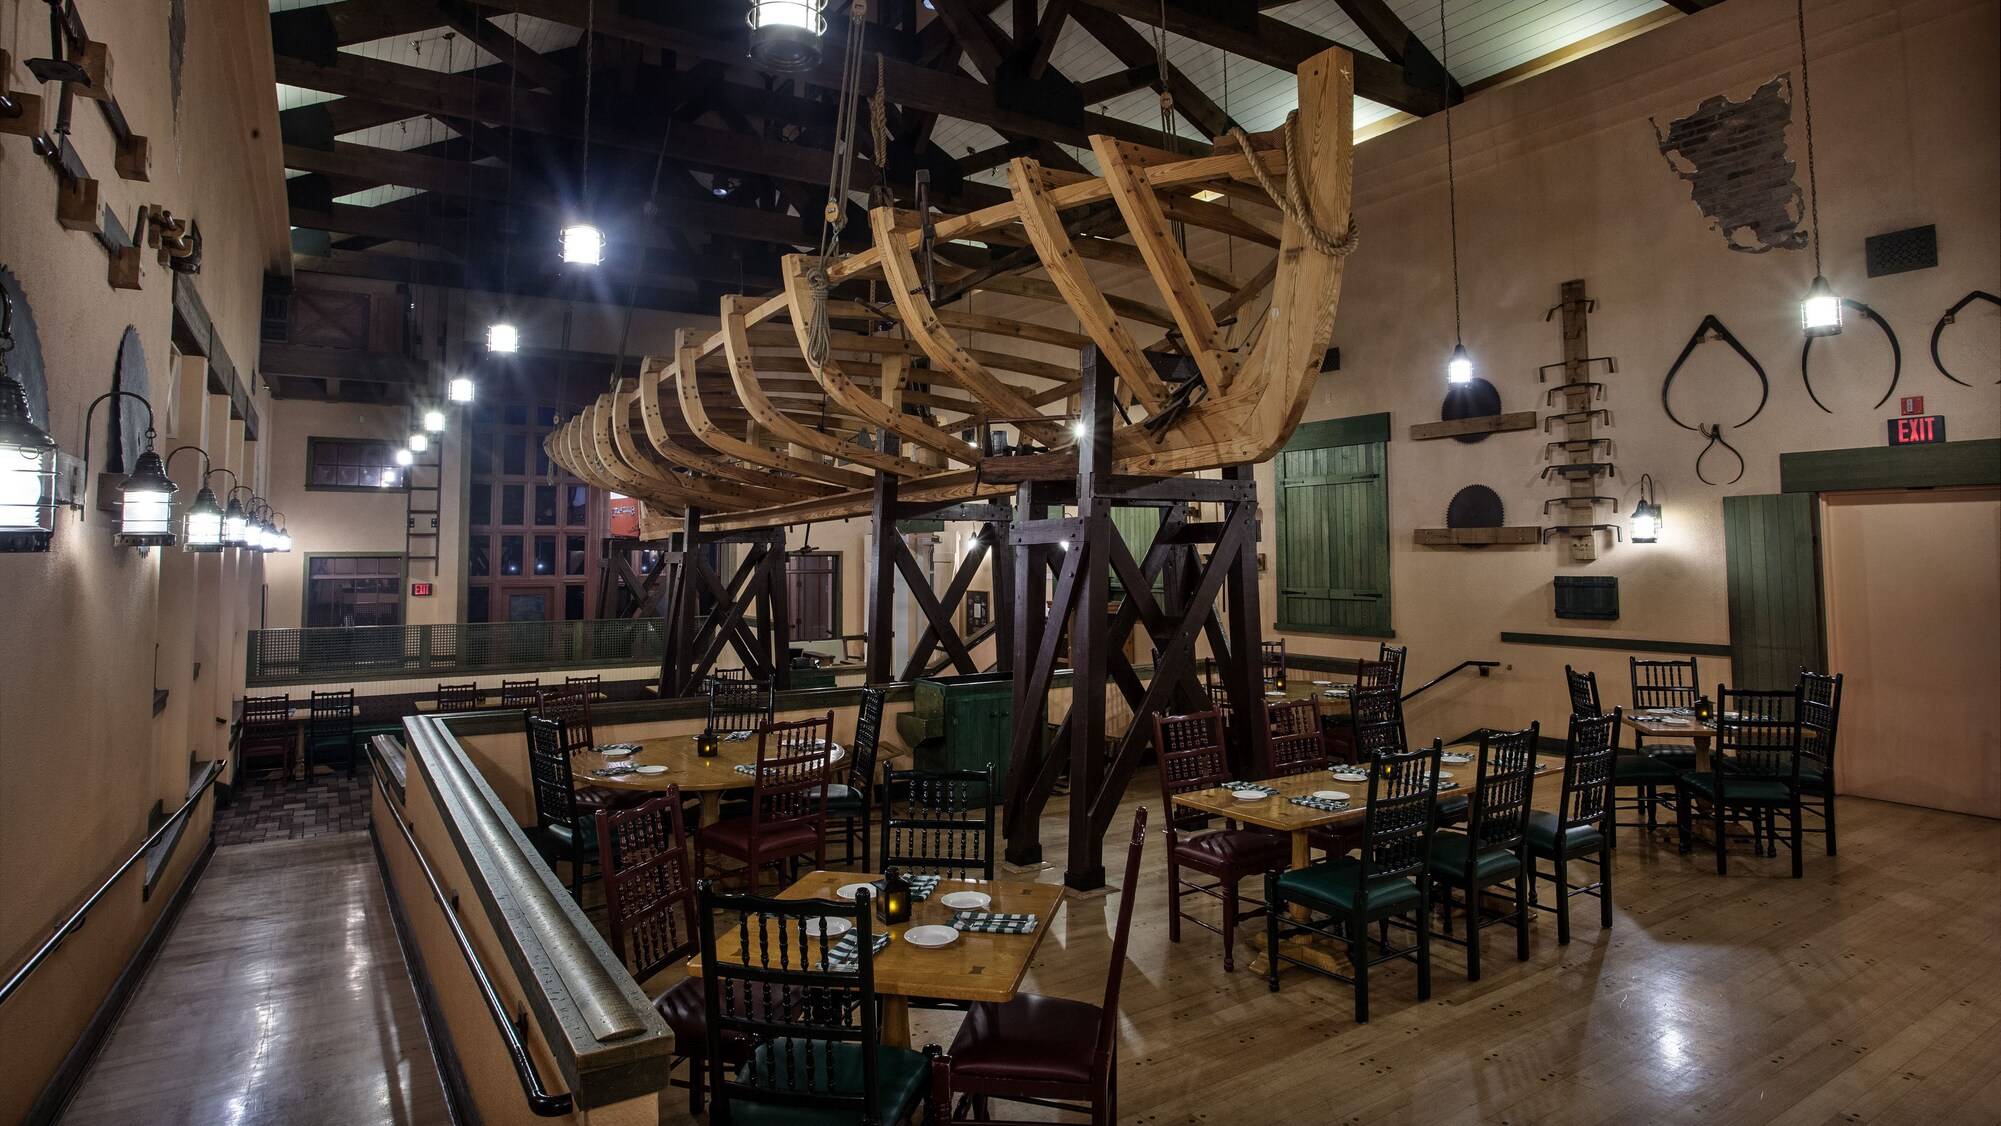 Boatwright's Dining Hall